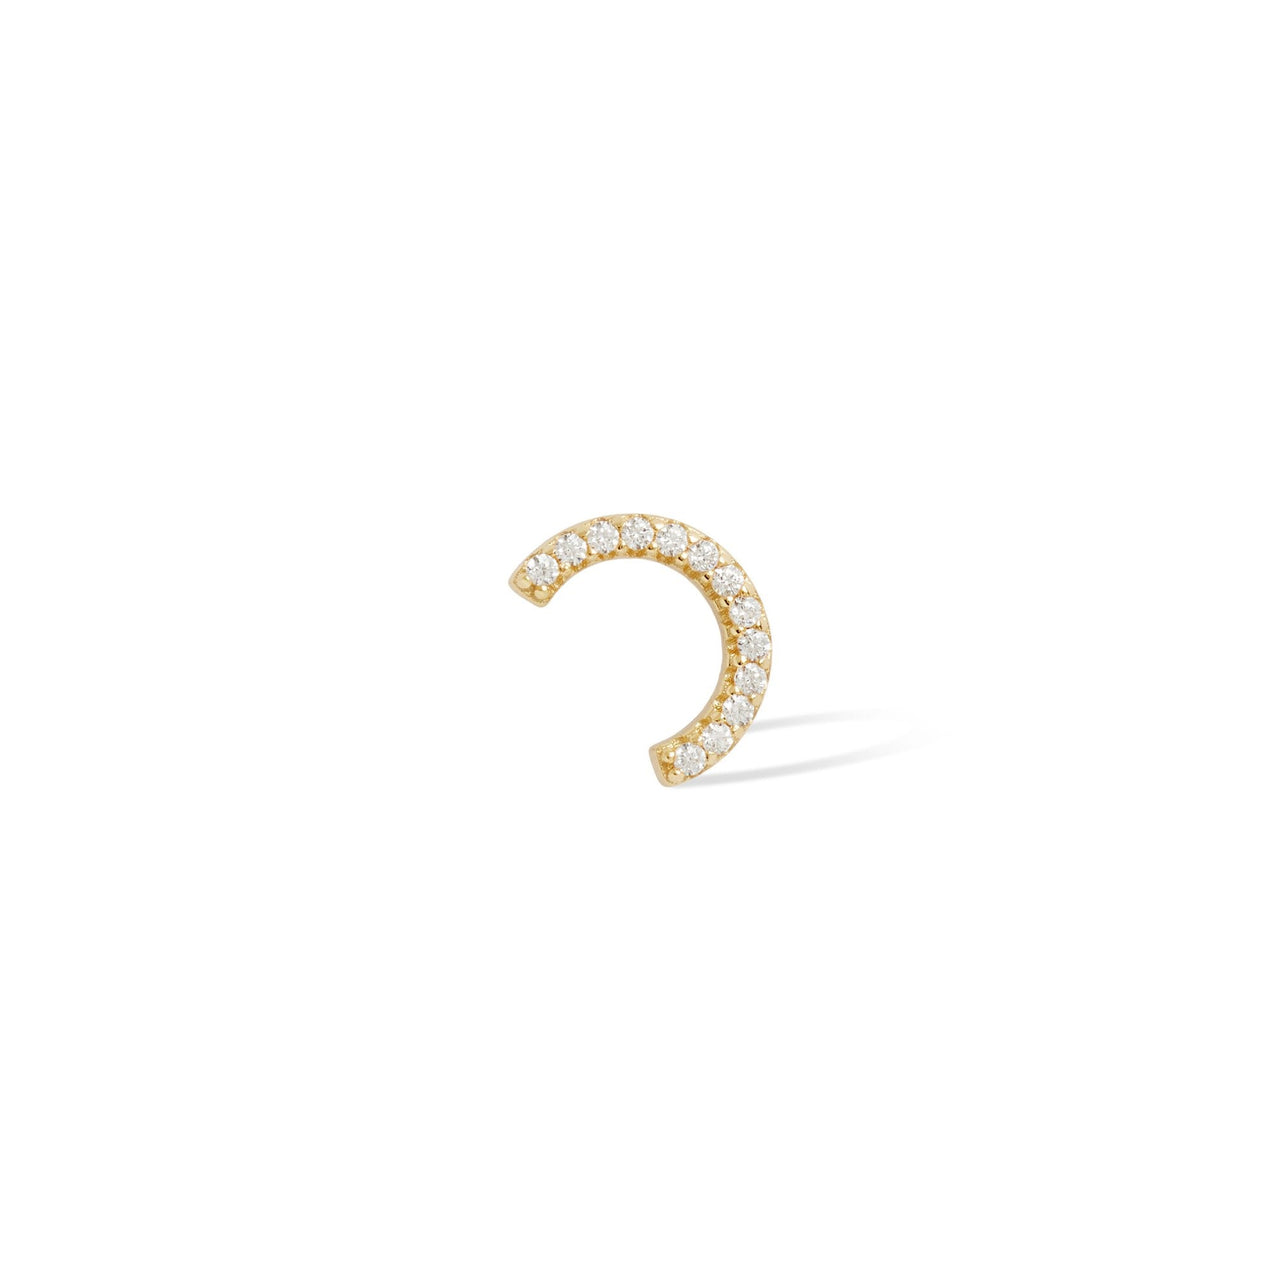 Single earring Half circle gold vermeil stud (ball screw)